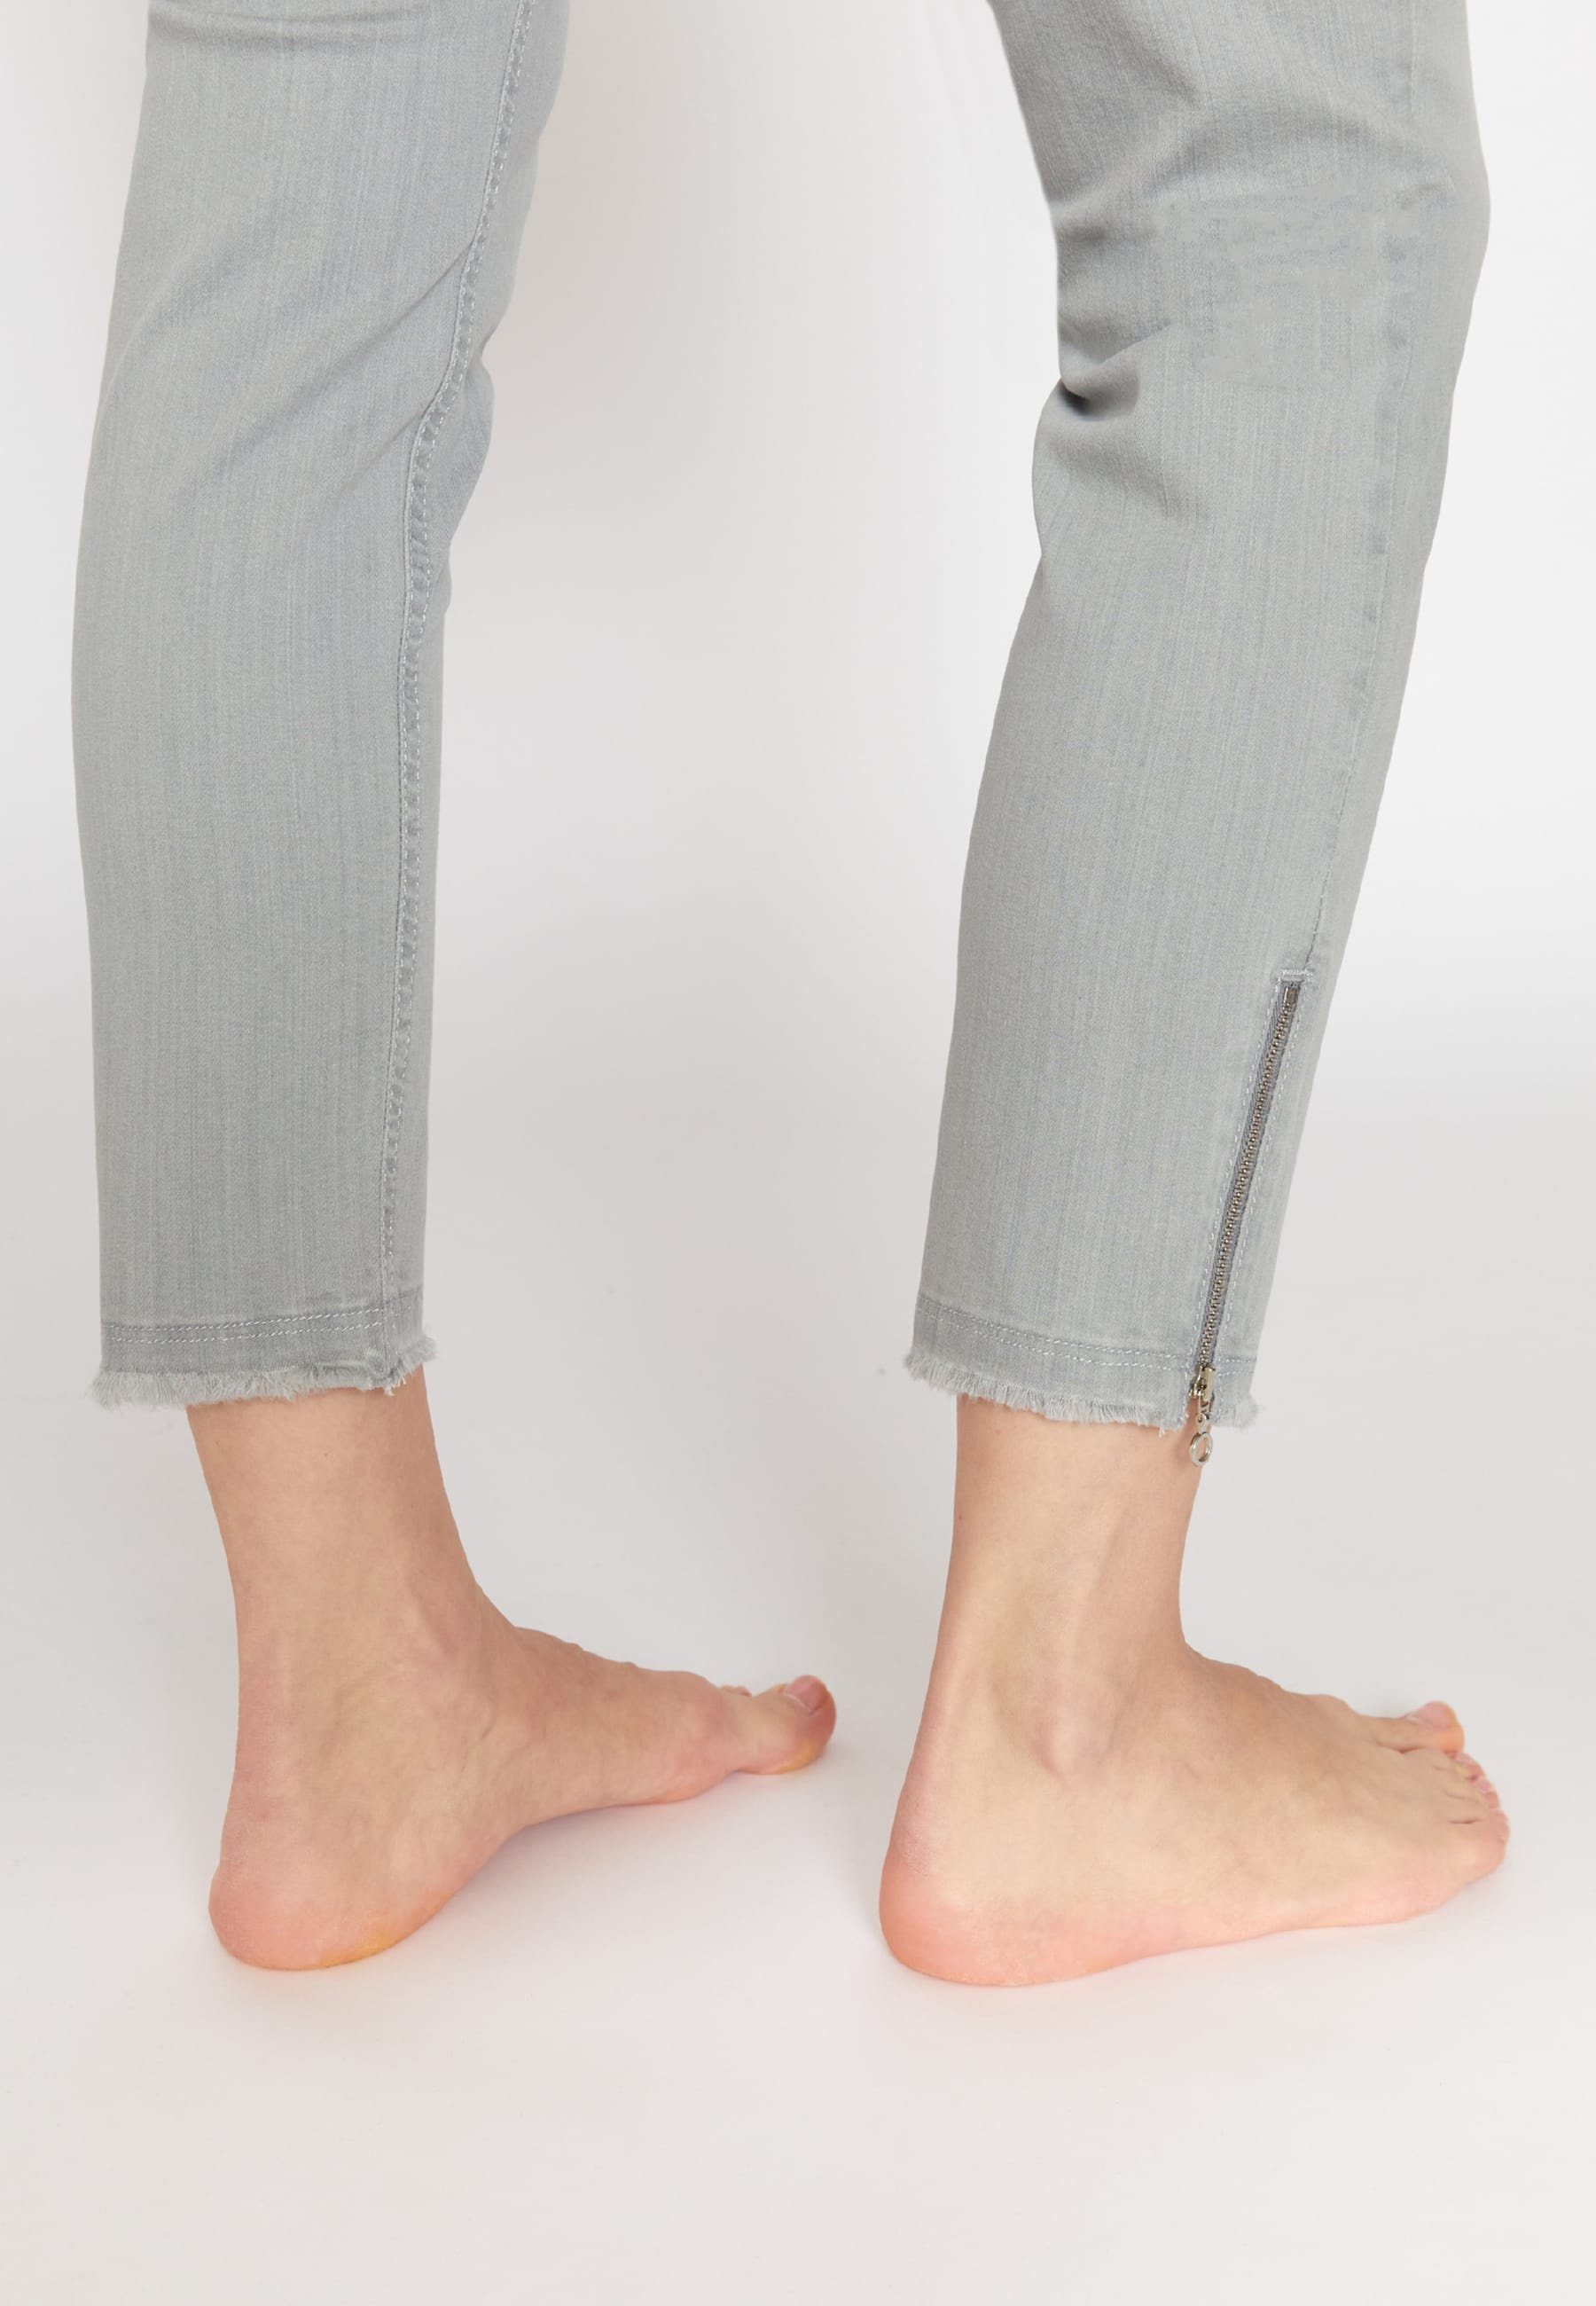 Ankle mit Slim-fit-Jeans Label-Applikationen Fringe hellgrau ANGELS Slim-Jeans Zip Skinny